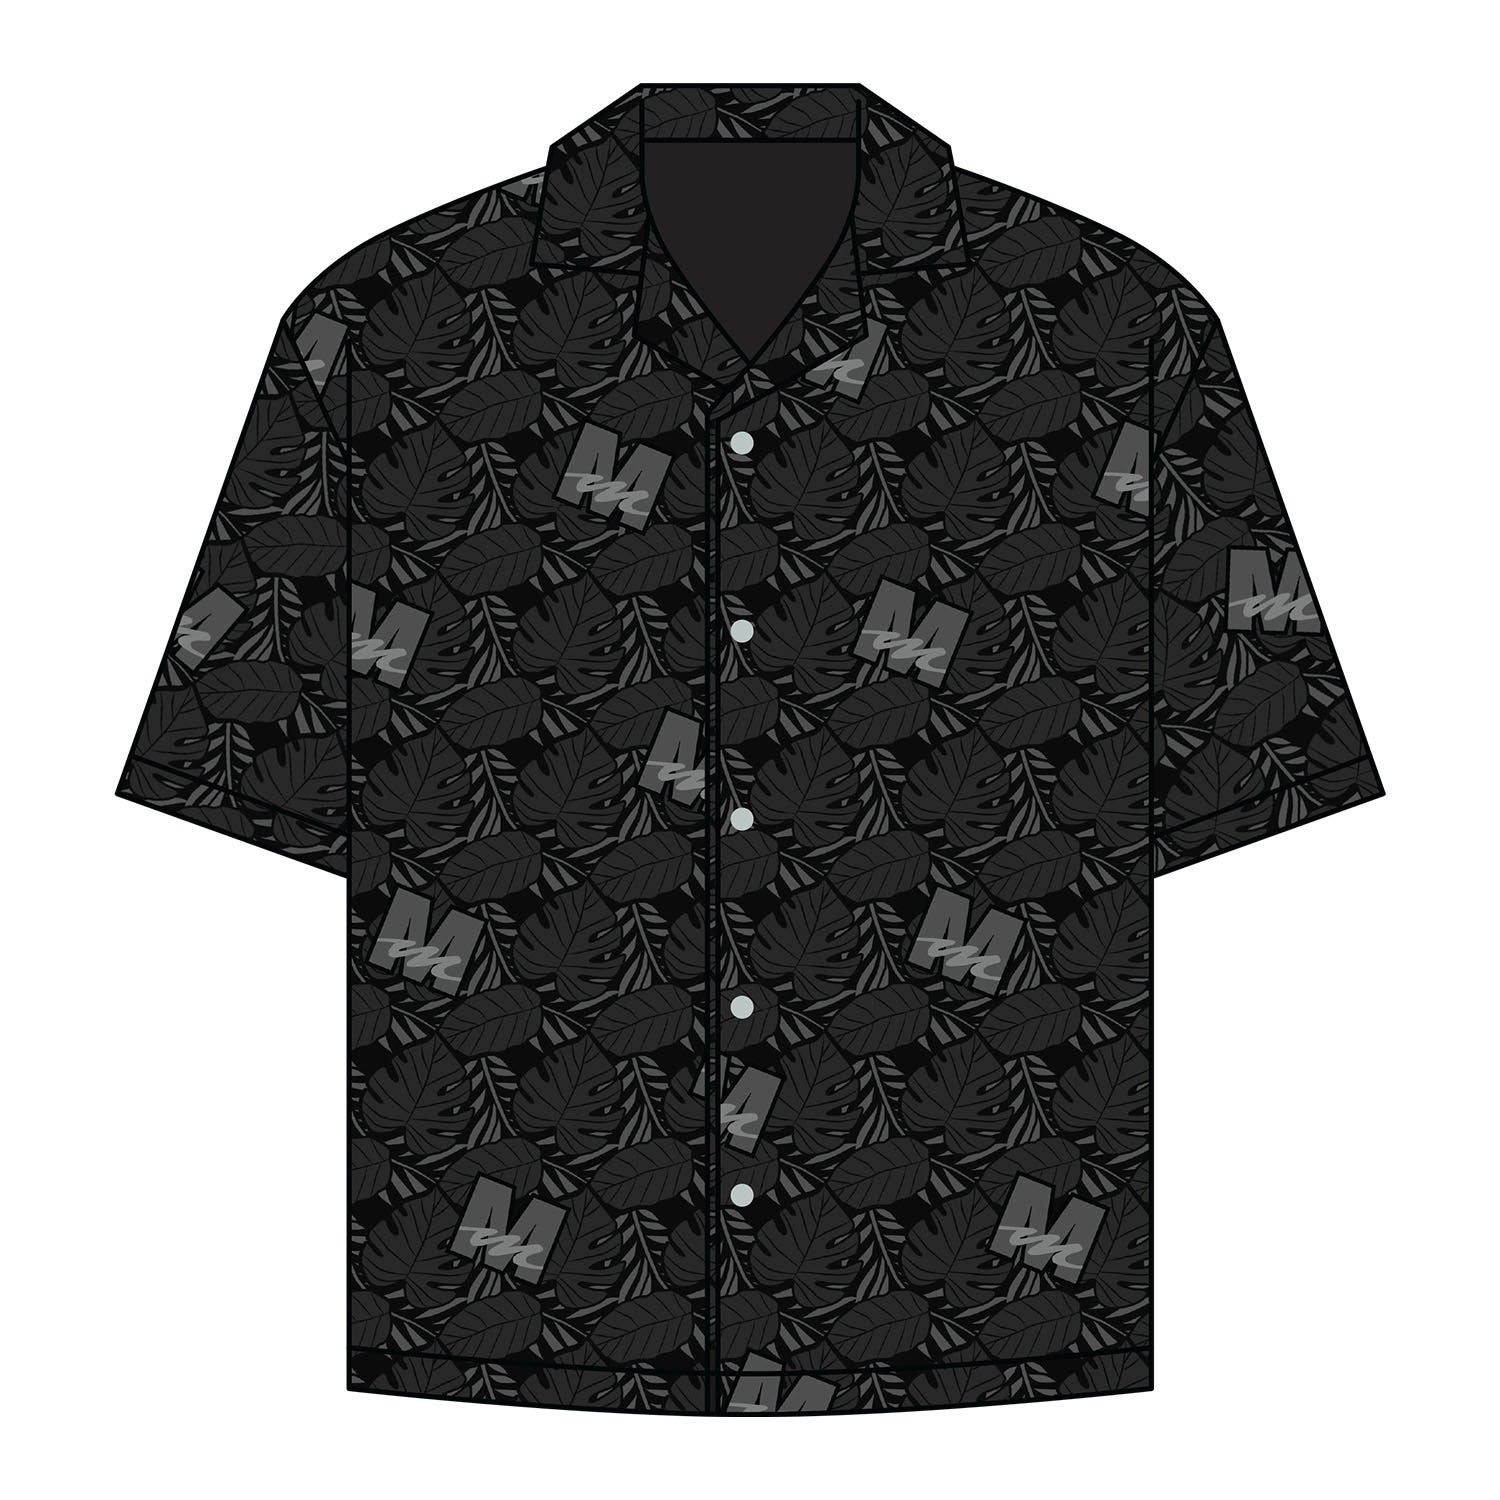 Mecum Auctions Black Hawaiian Shirt - Front View